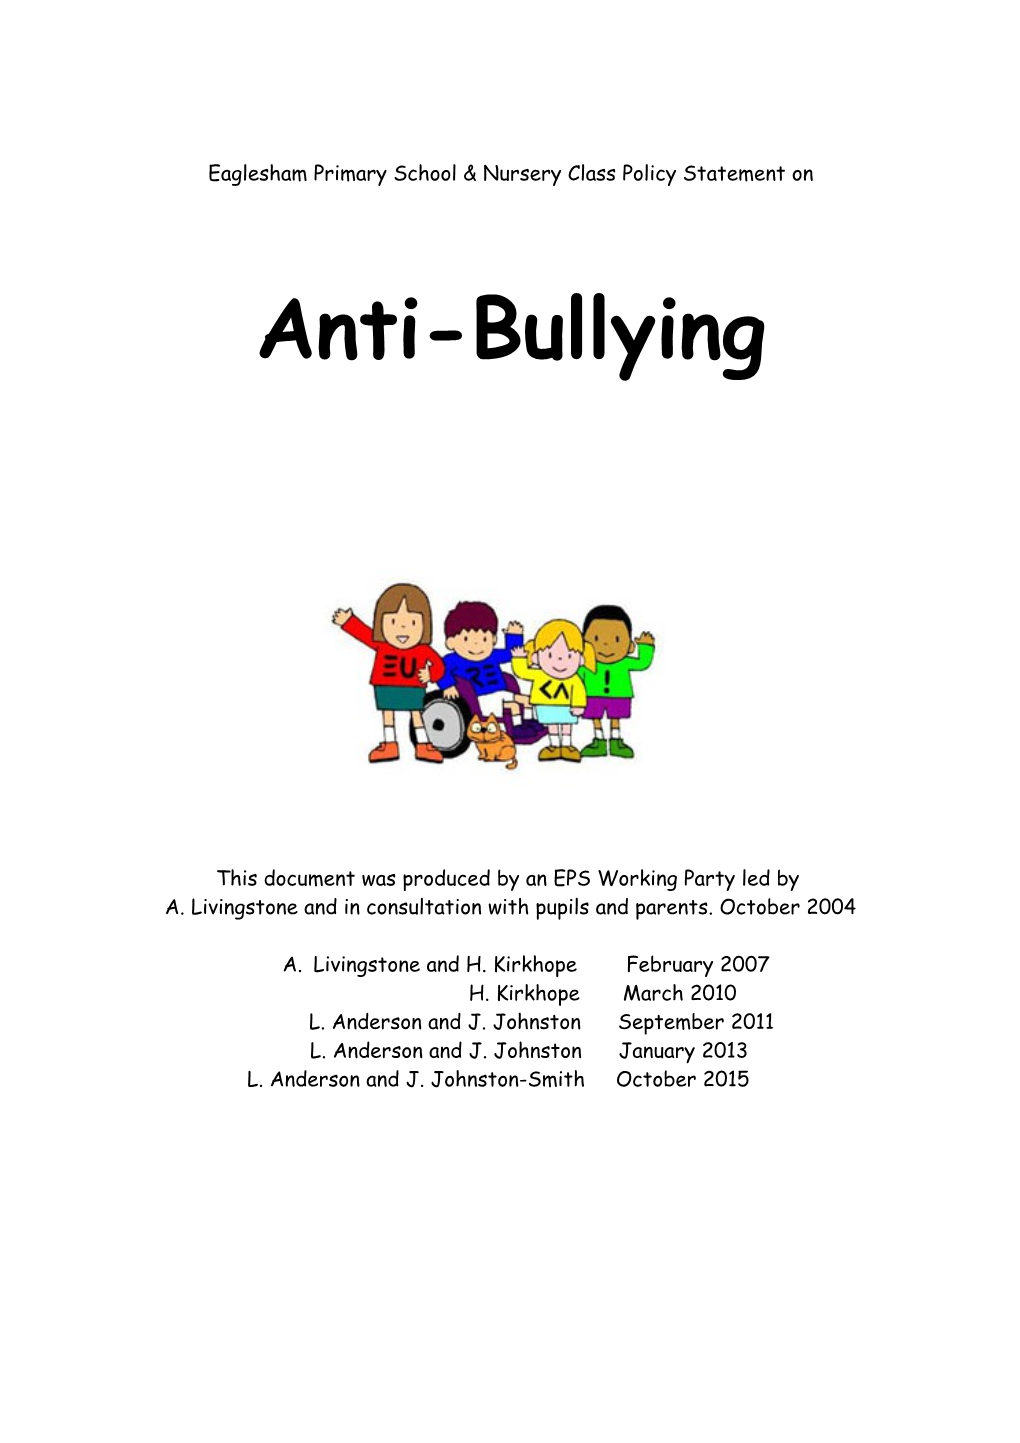 Anti-Bullying Statement